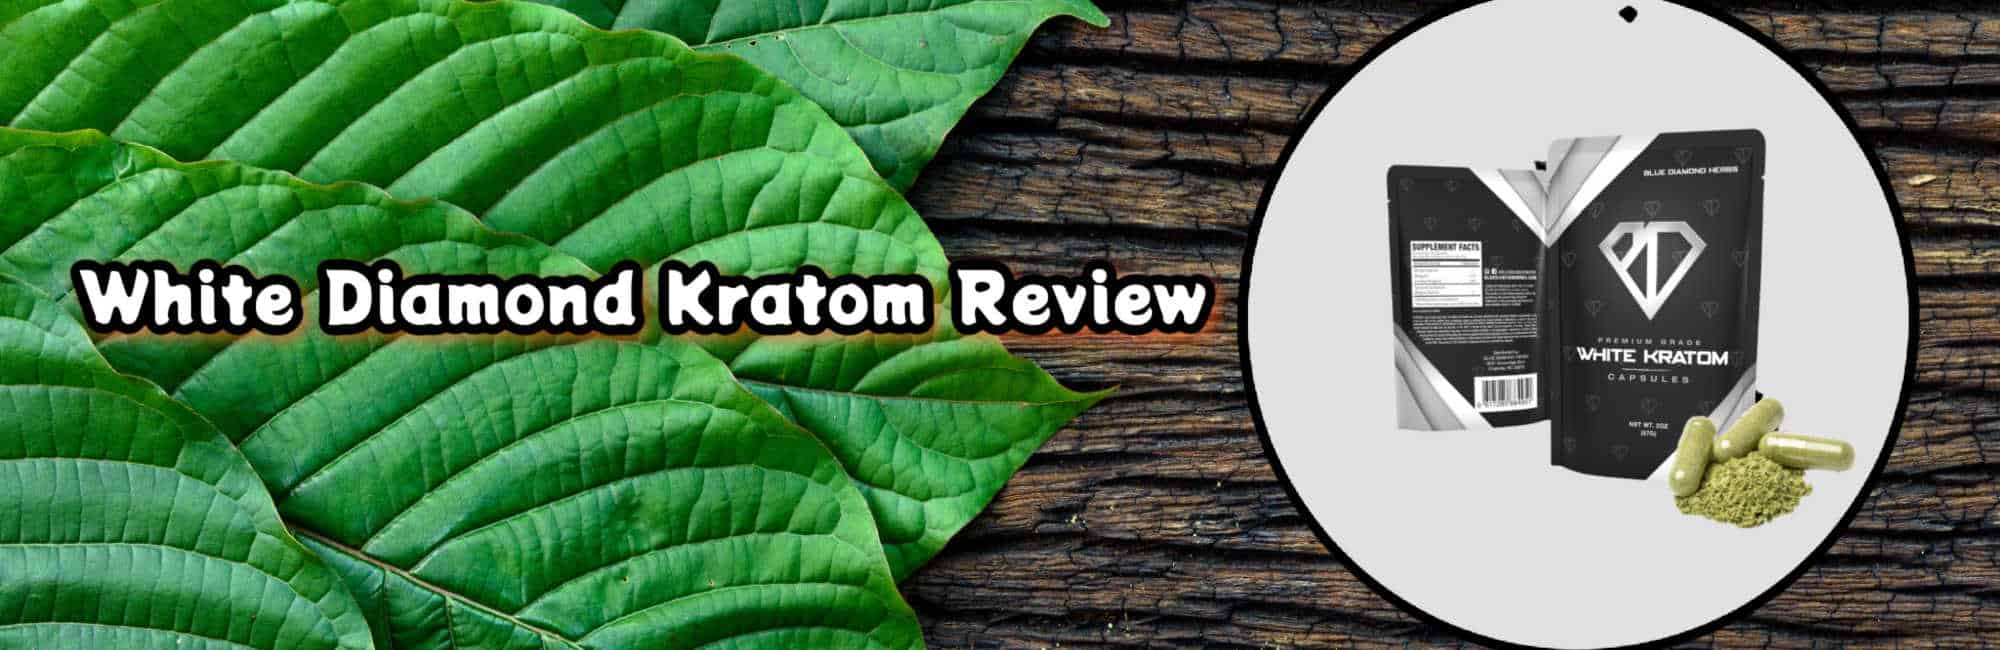 image of white diamond kratom review